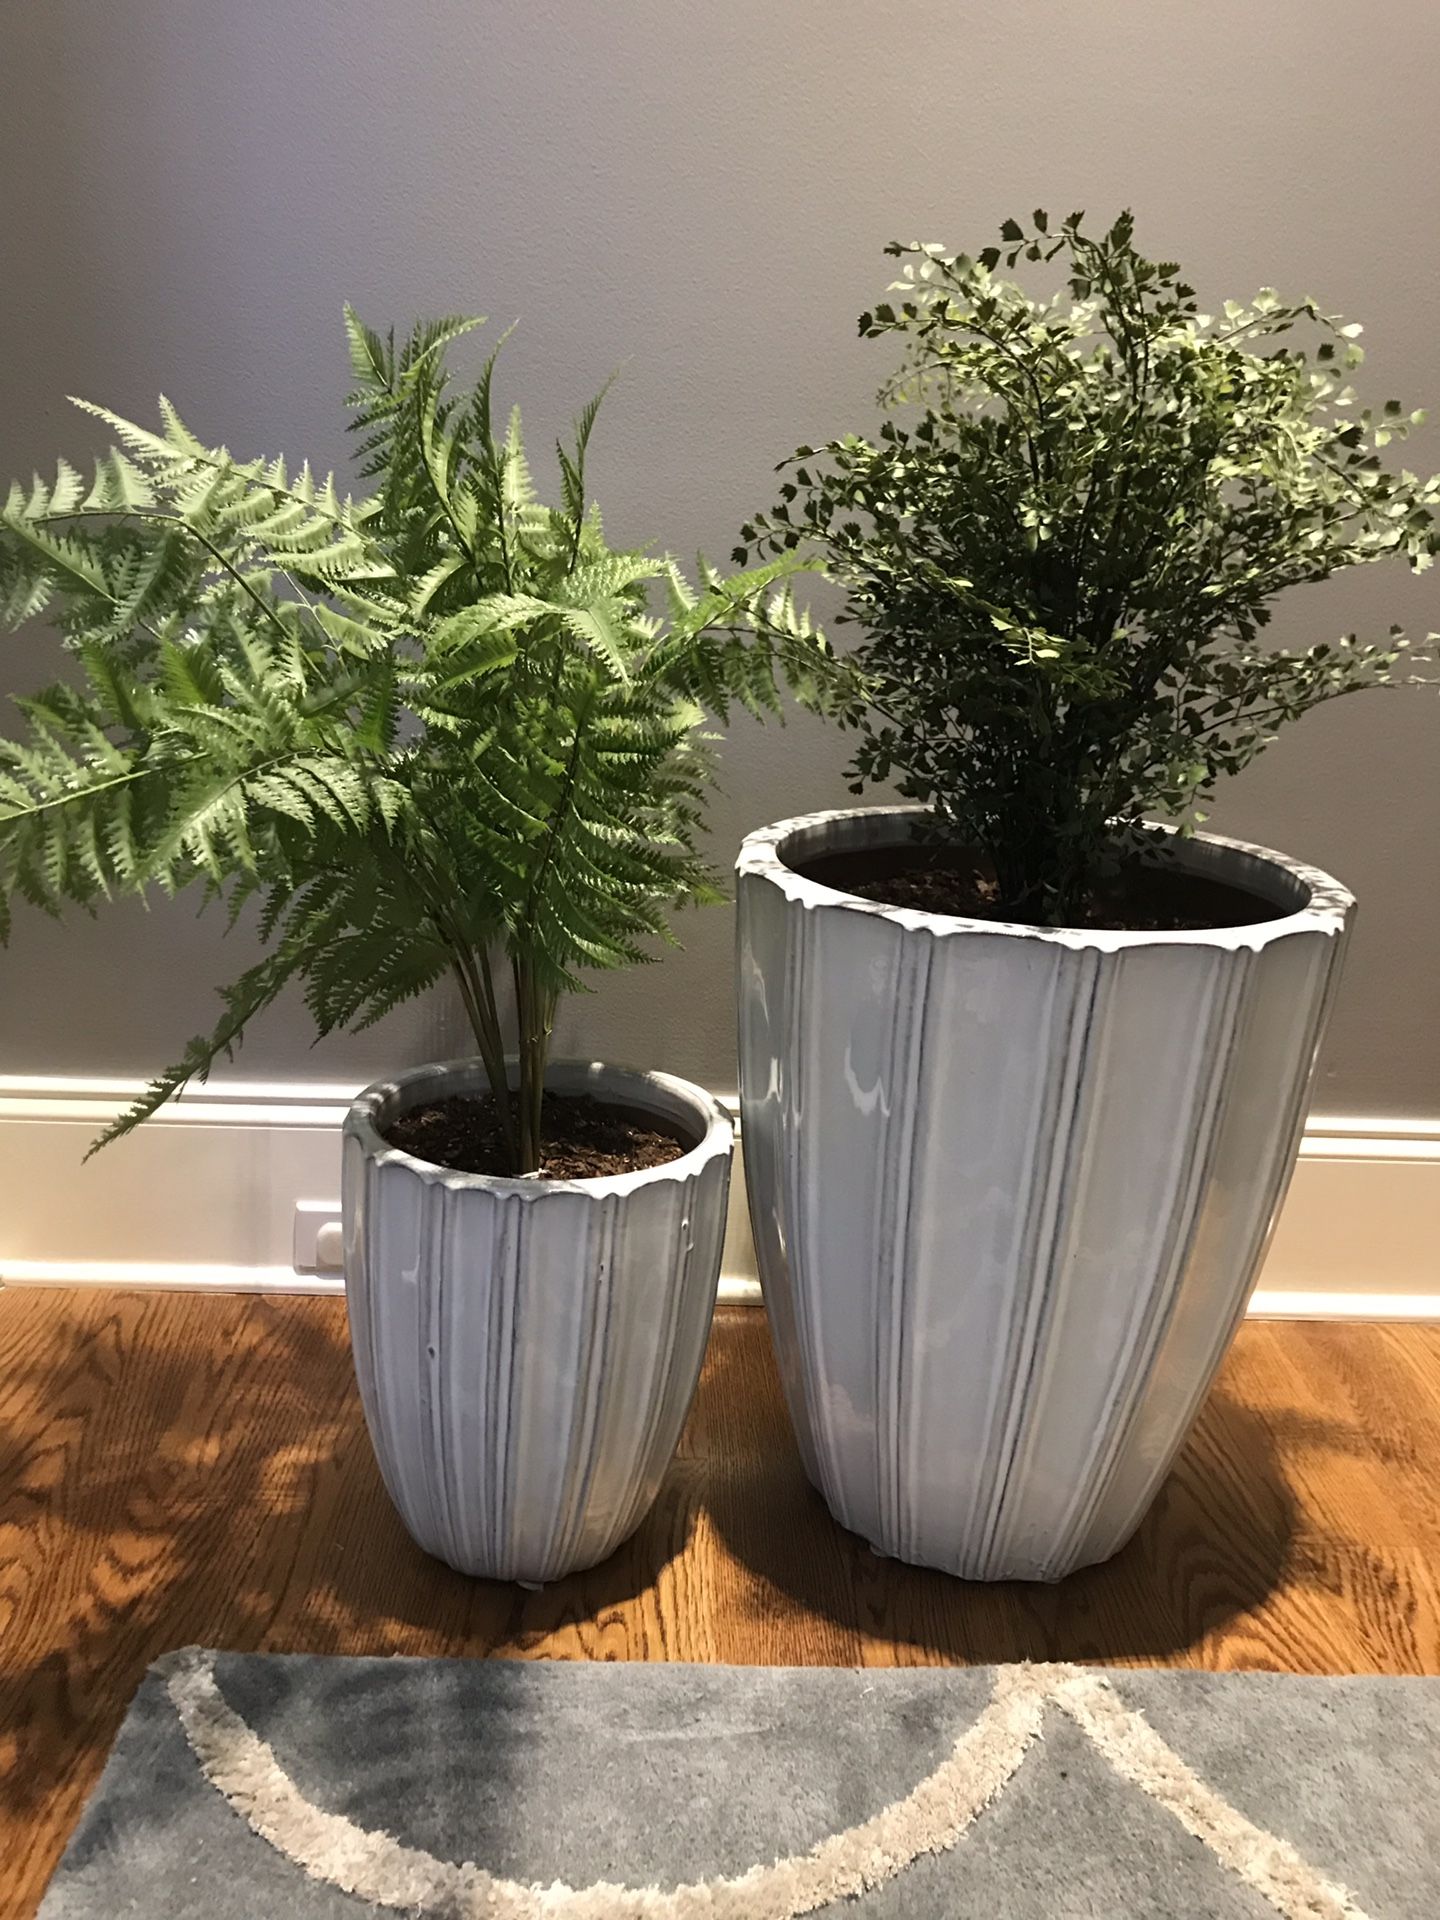 TWO large ceramic planters